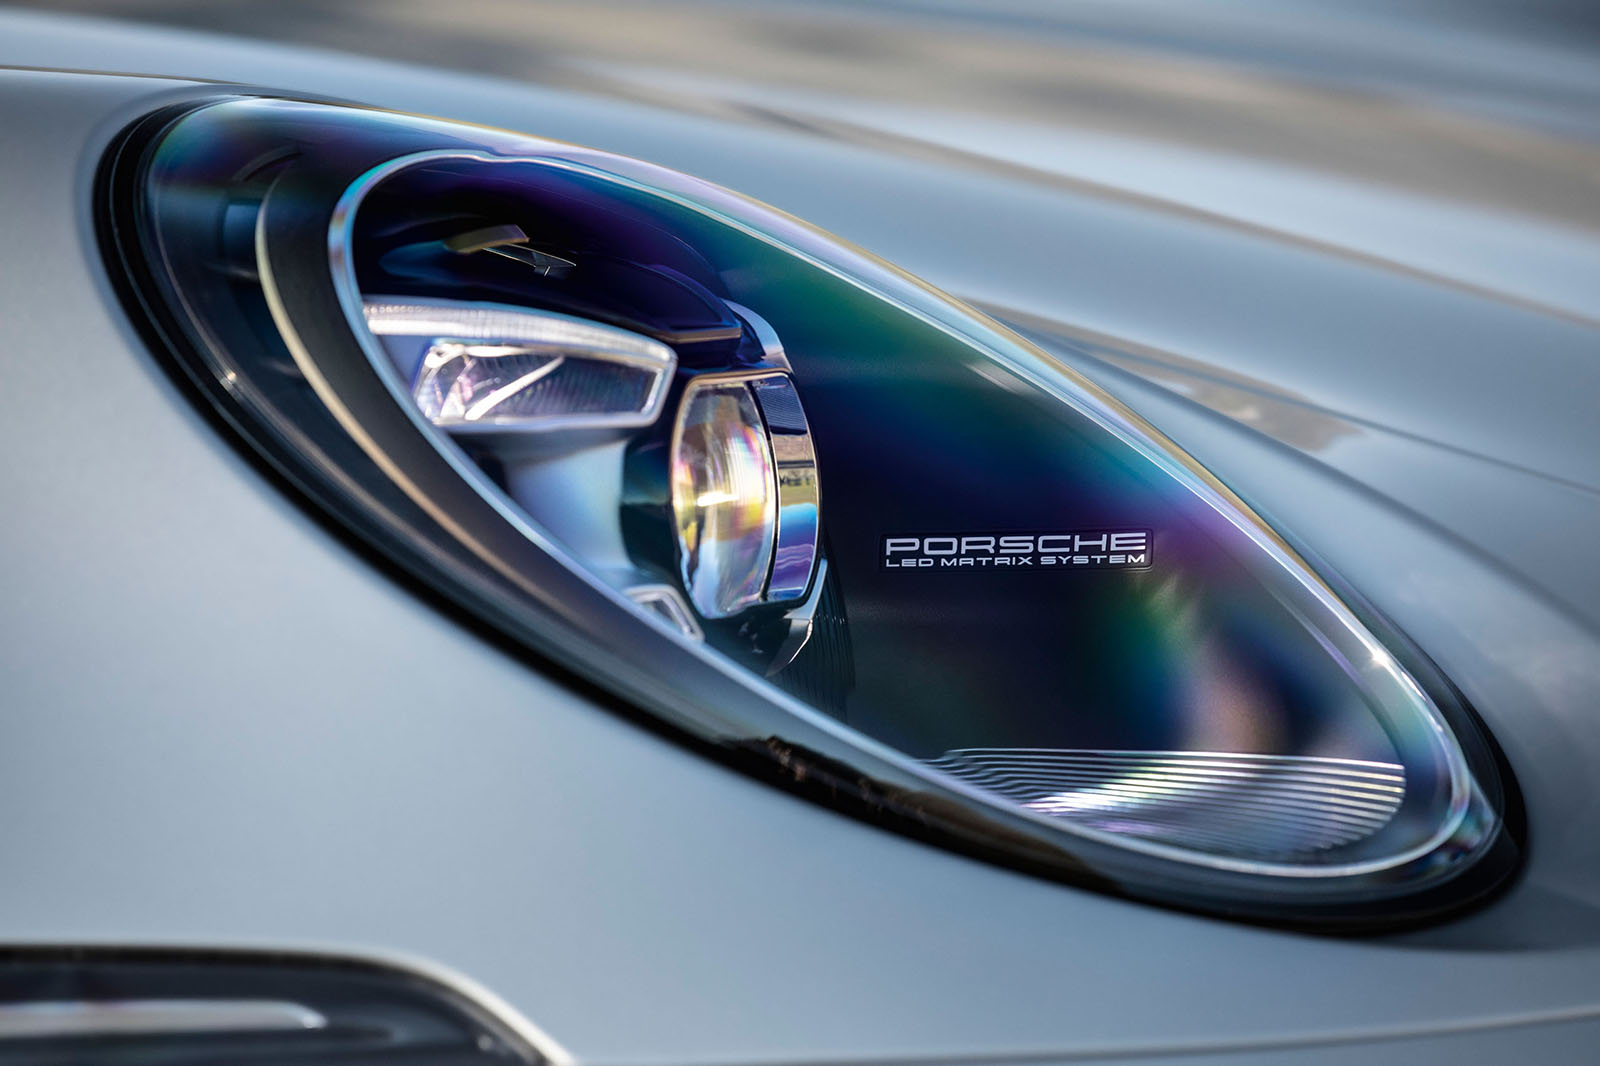 New 2019 Porsche 911: eighth-generation sports car revealed | Autocar